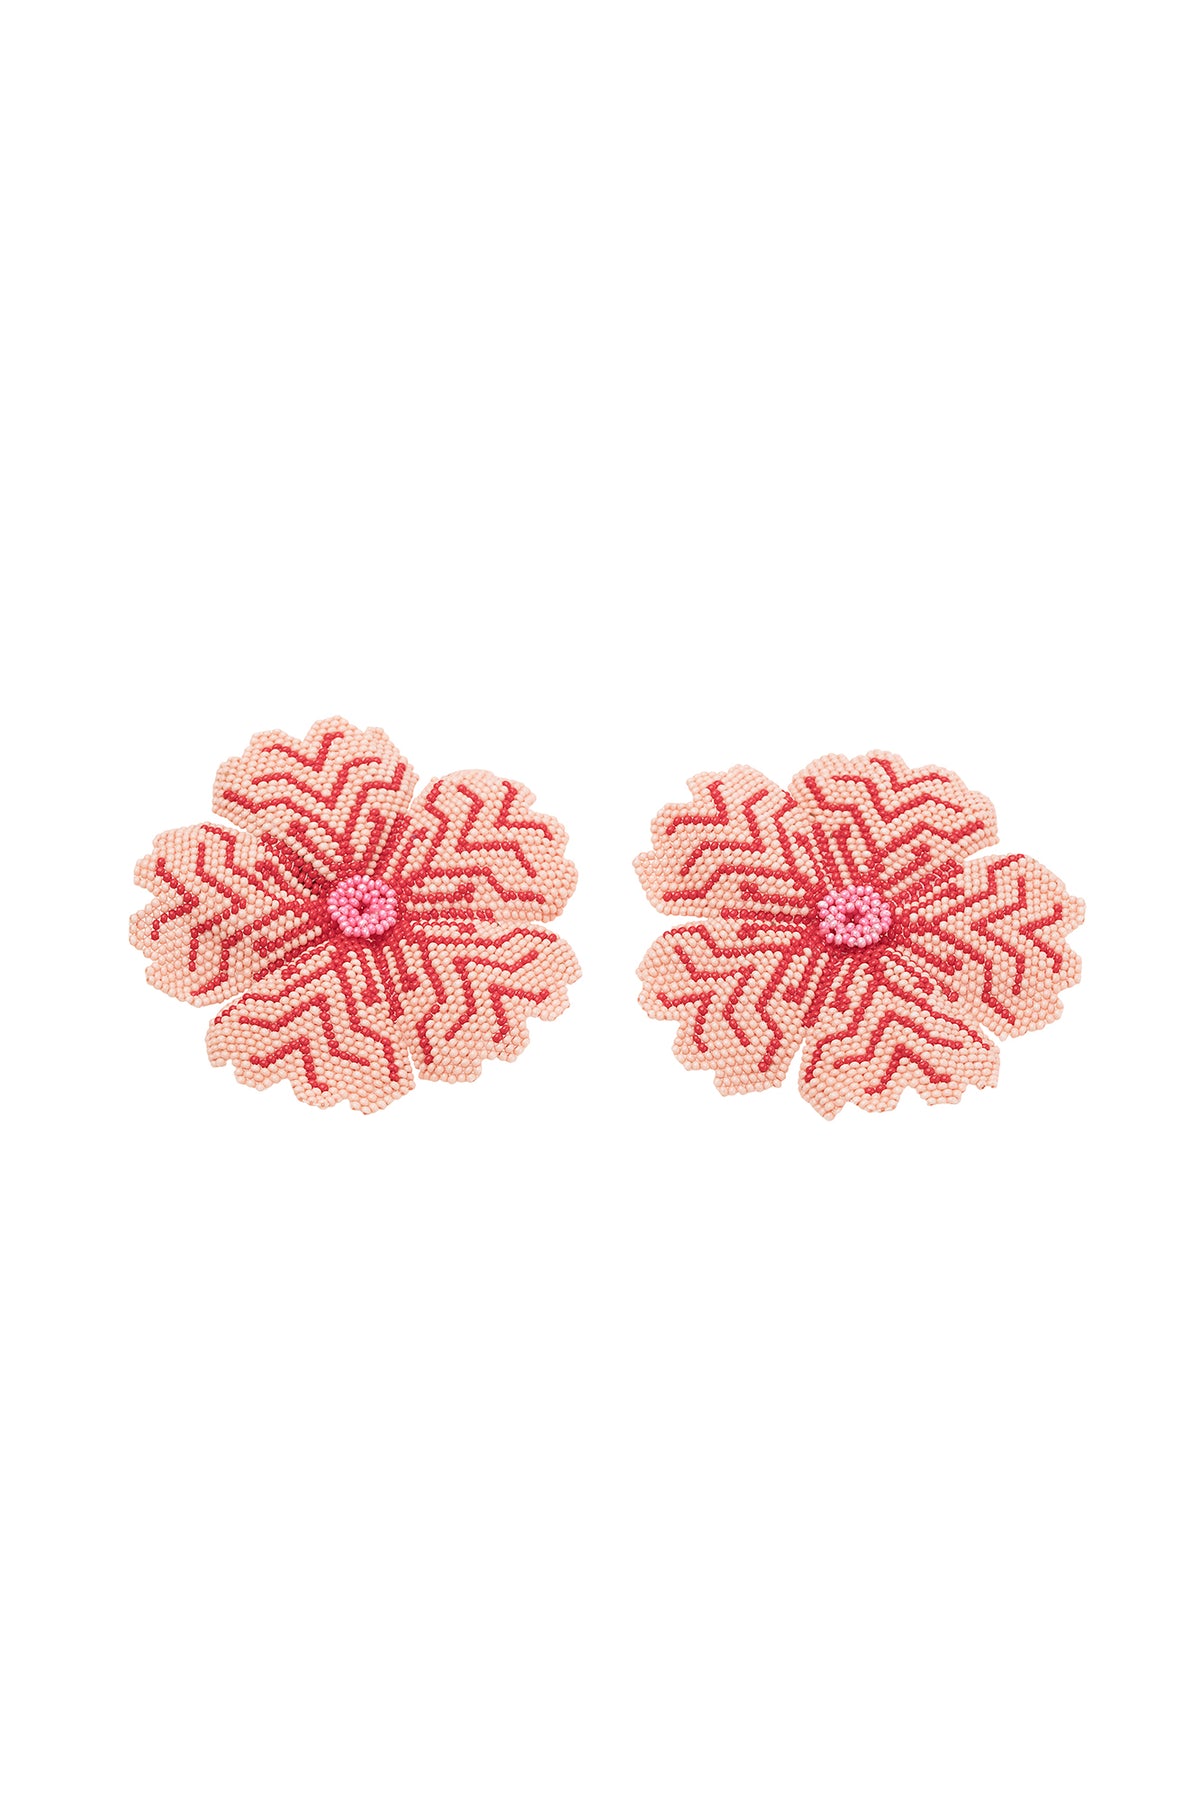 Carolina K Huichol Earrings in Rose/Red